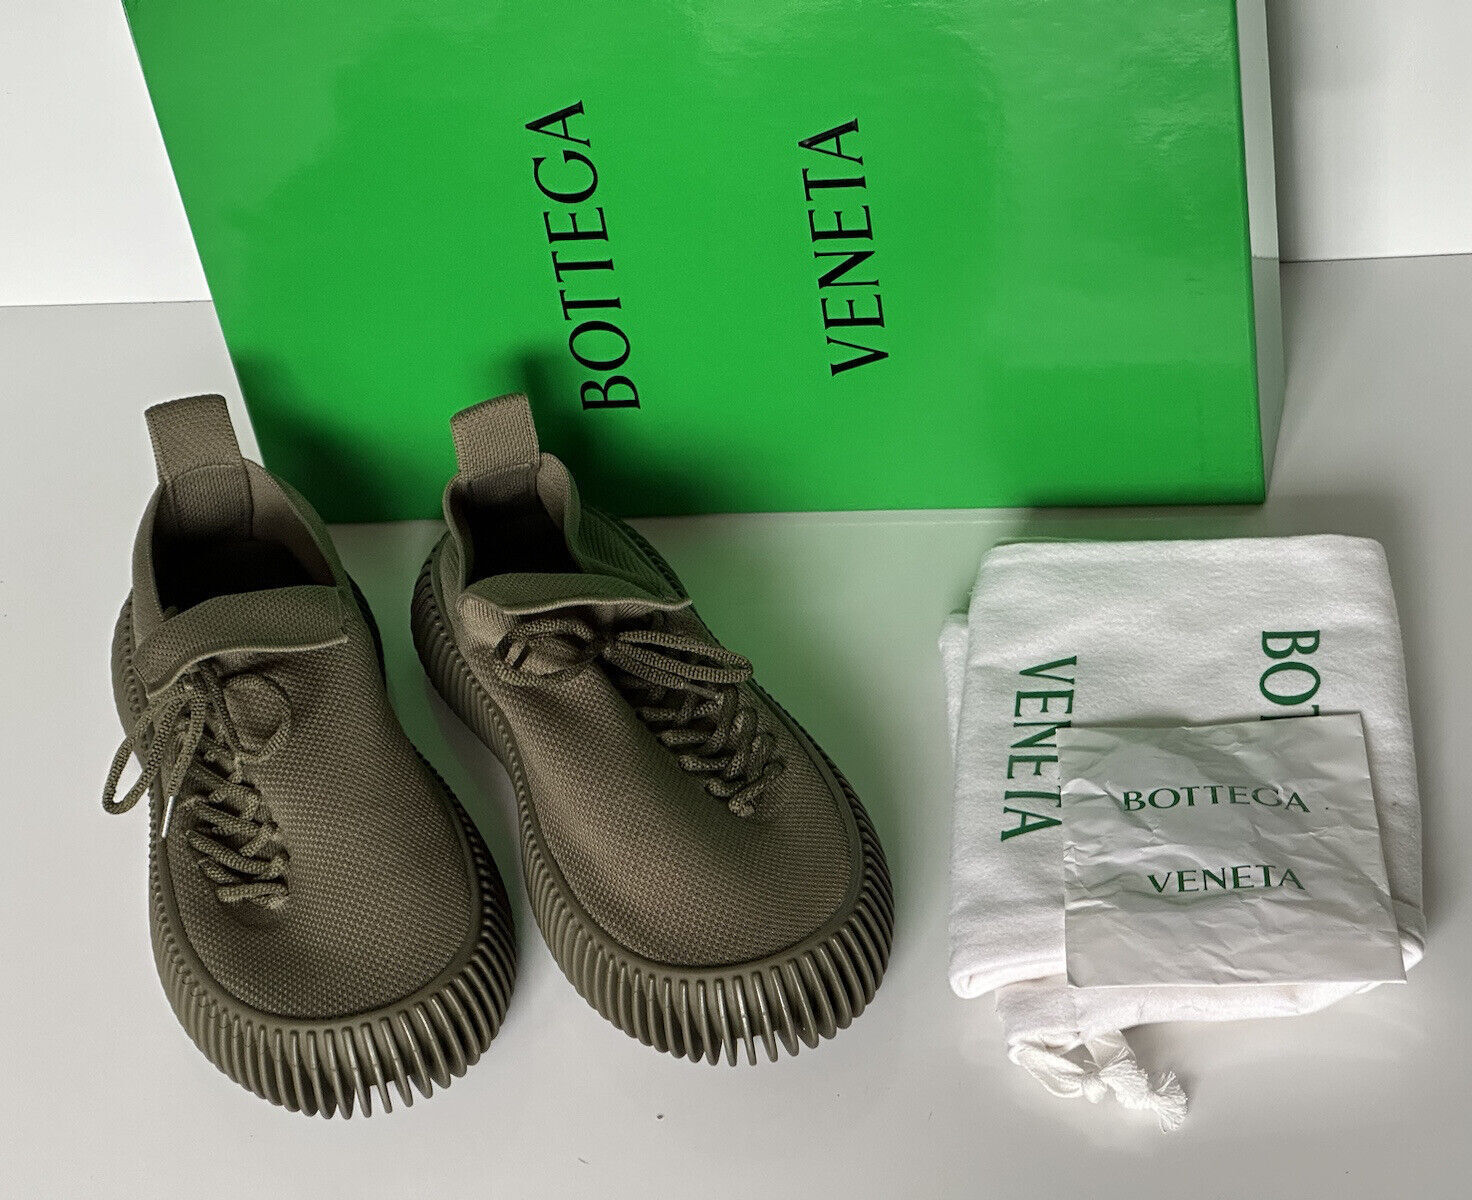 NIB $920 Bottega Veneta Men's Tech Knit Stretch Khaki Sneakers 10 US (43) 690112